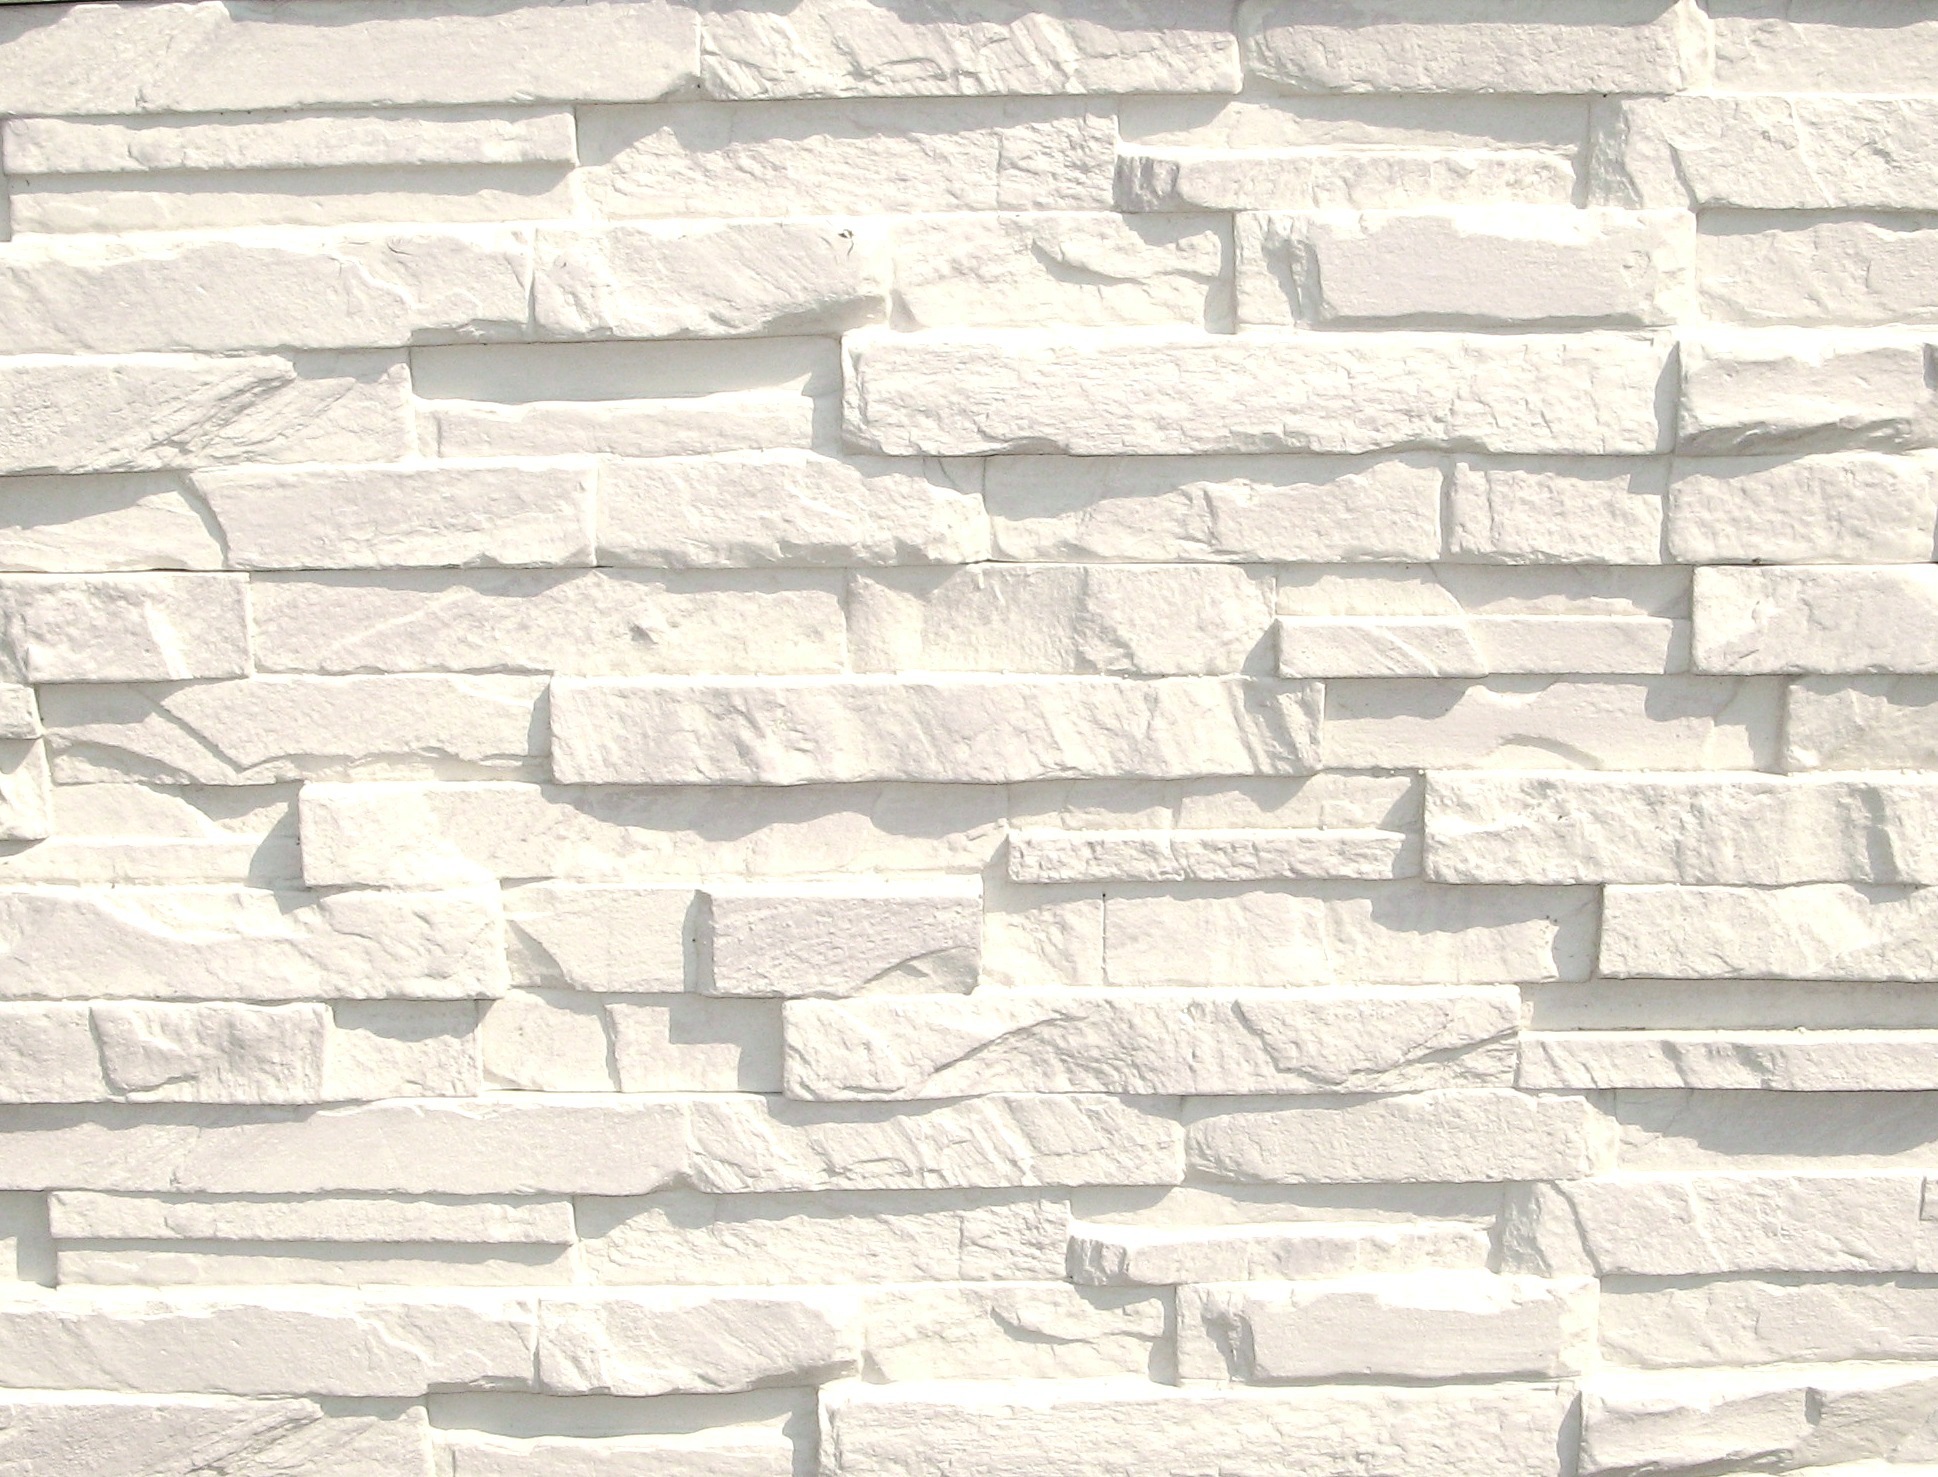 Architecture-decoration-white-brick-wall-external-stone-cladding-stone-for-fireplace-vinyl-stone-siding-exterior-stone-siding-panels-for-walls-feature-stone-wall-cladding-faux-brick-siding-rock-wall-pane